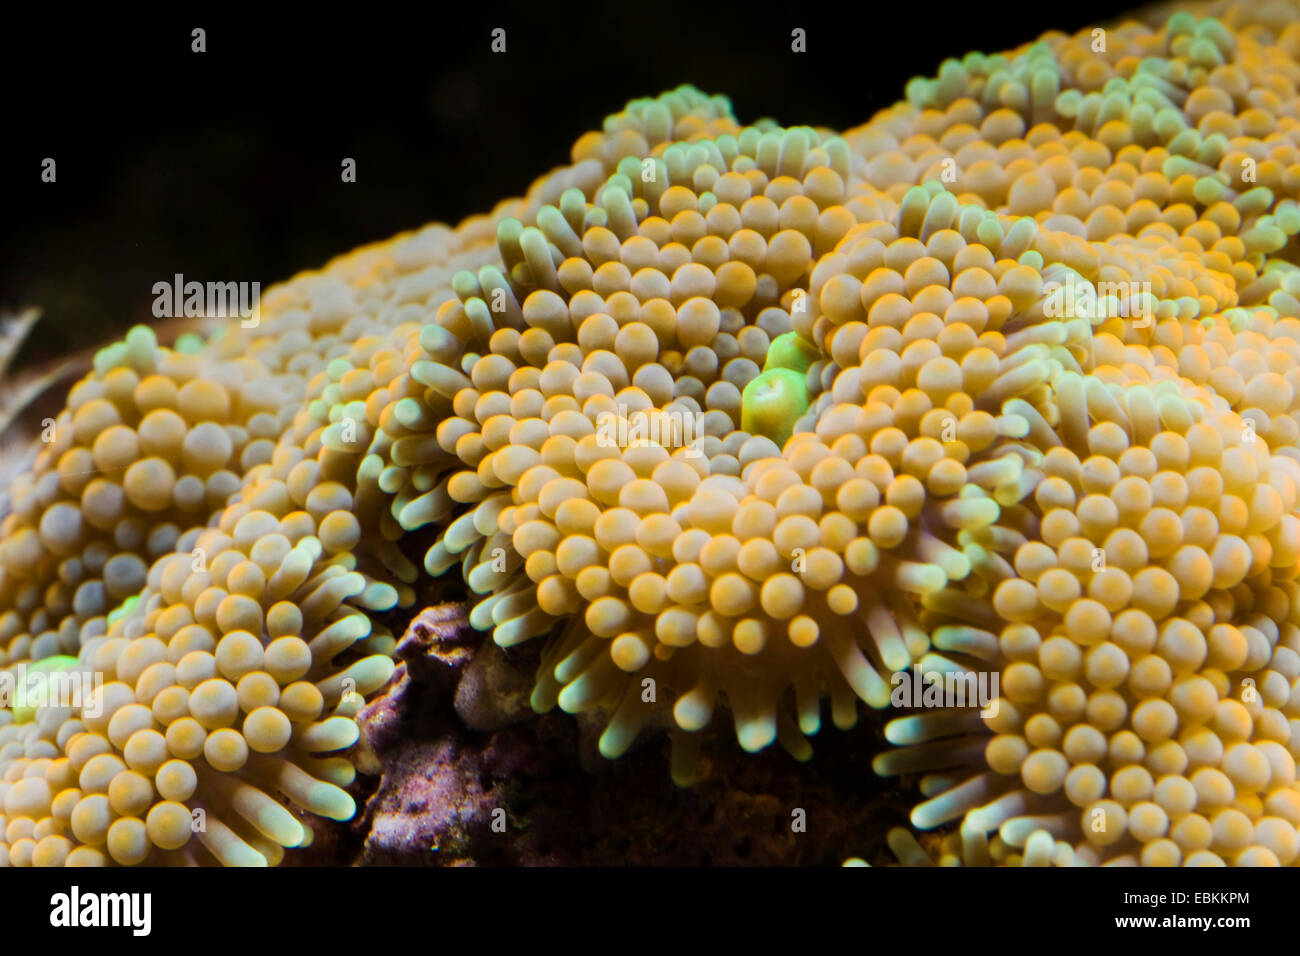 Florida false coral, Ricordia Mushroom Polyps (Ricordea florida), close-up view Stock Photo